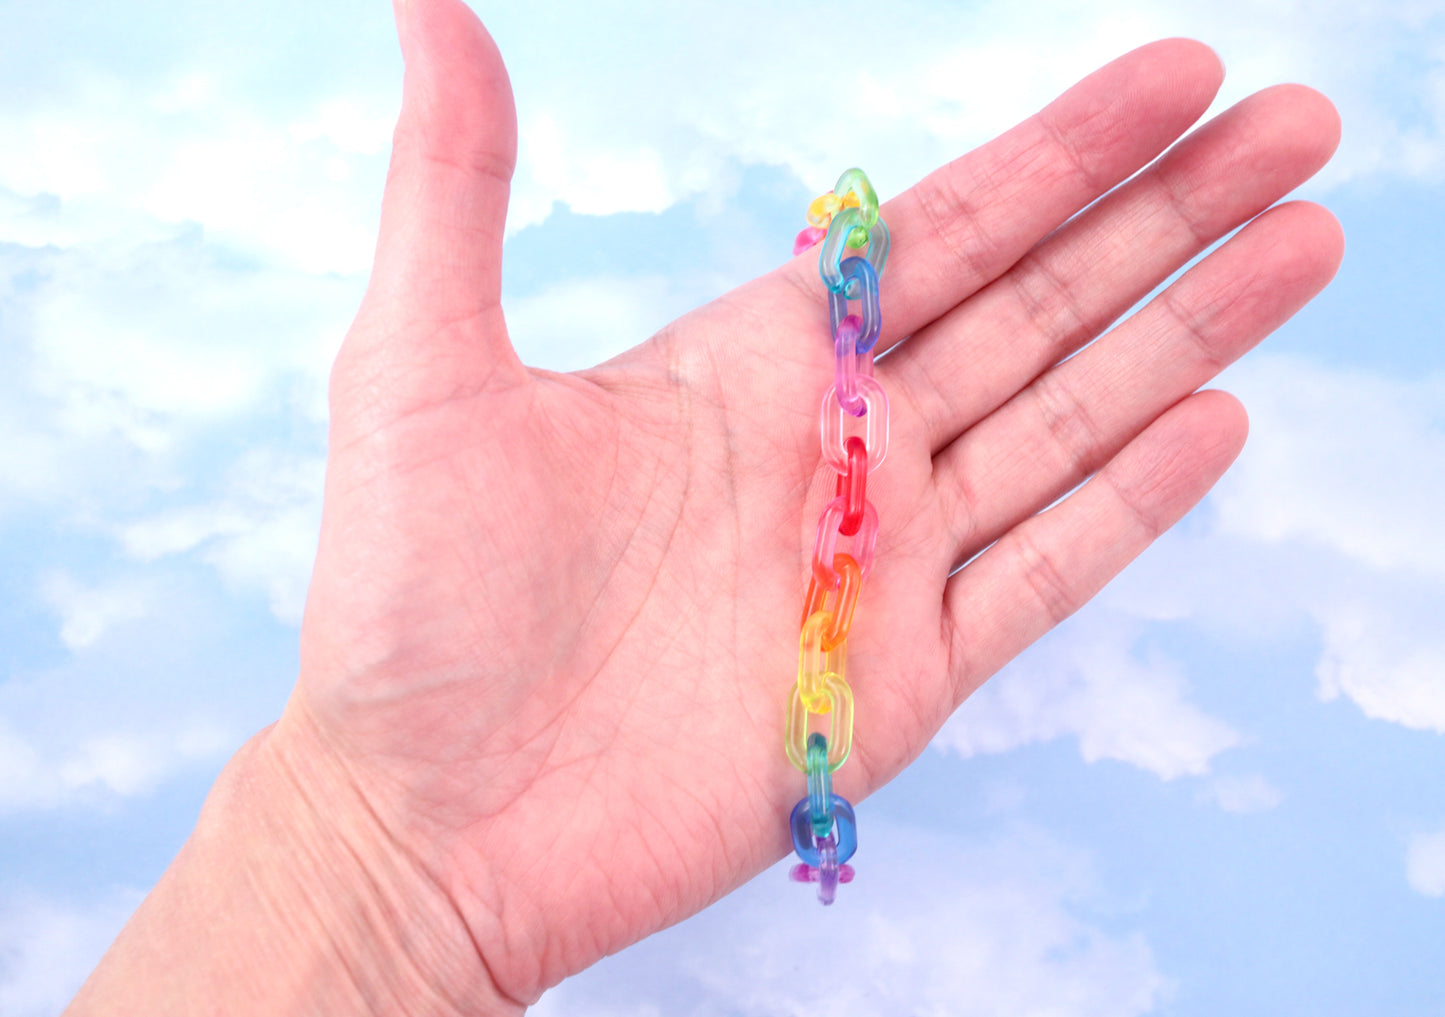 Plastic Chain Links - 15mm Transparent Colorful Plastic or Acrylic Chain Links - Mixed Colors - 200 pc set